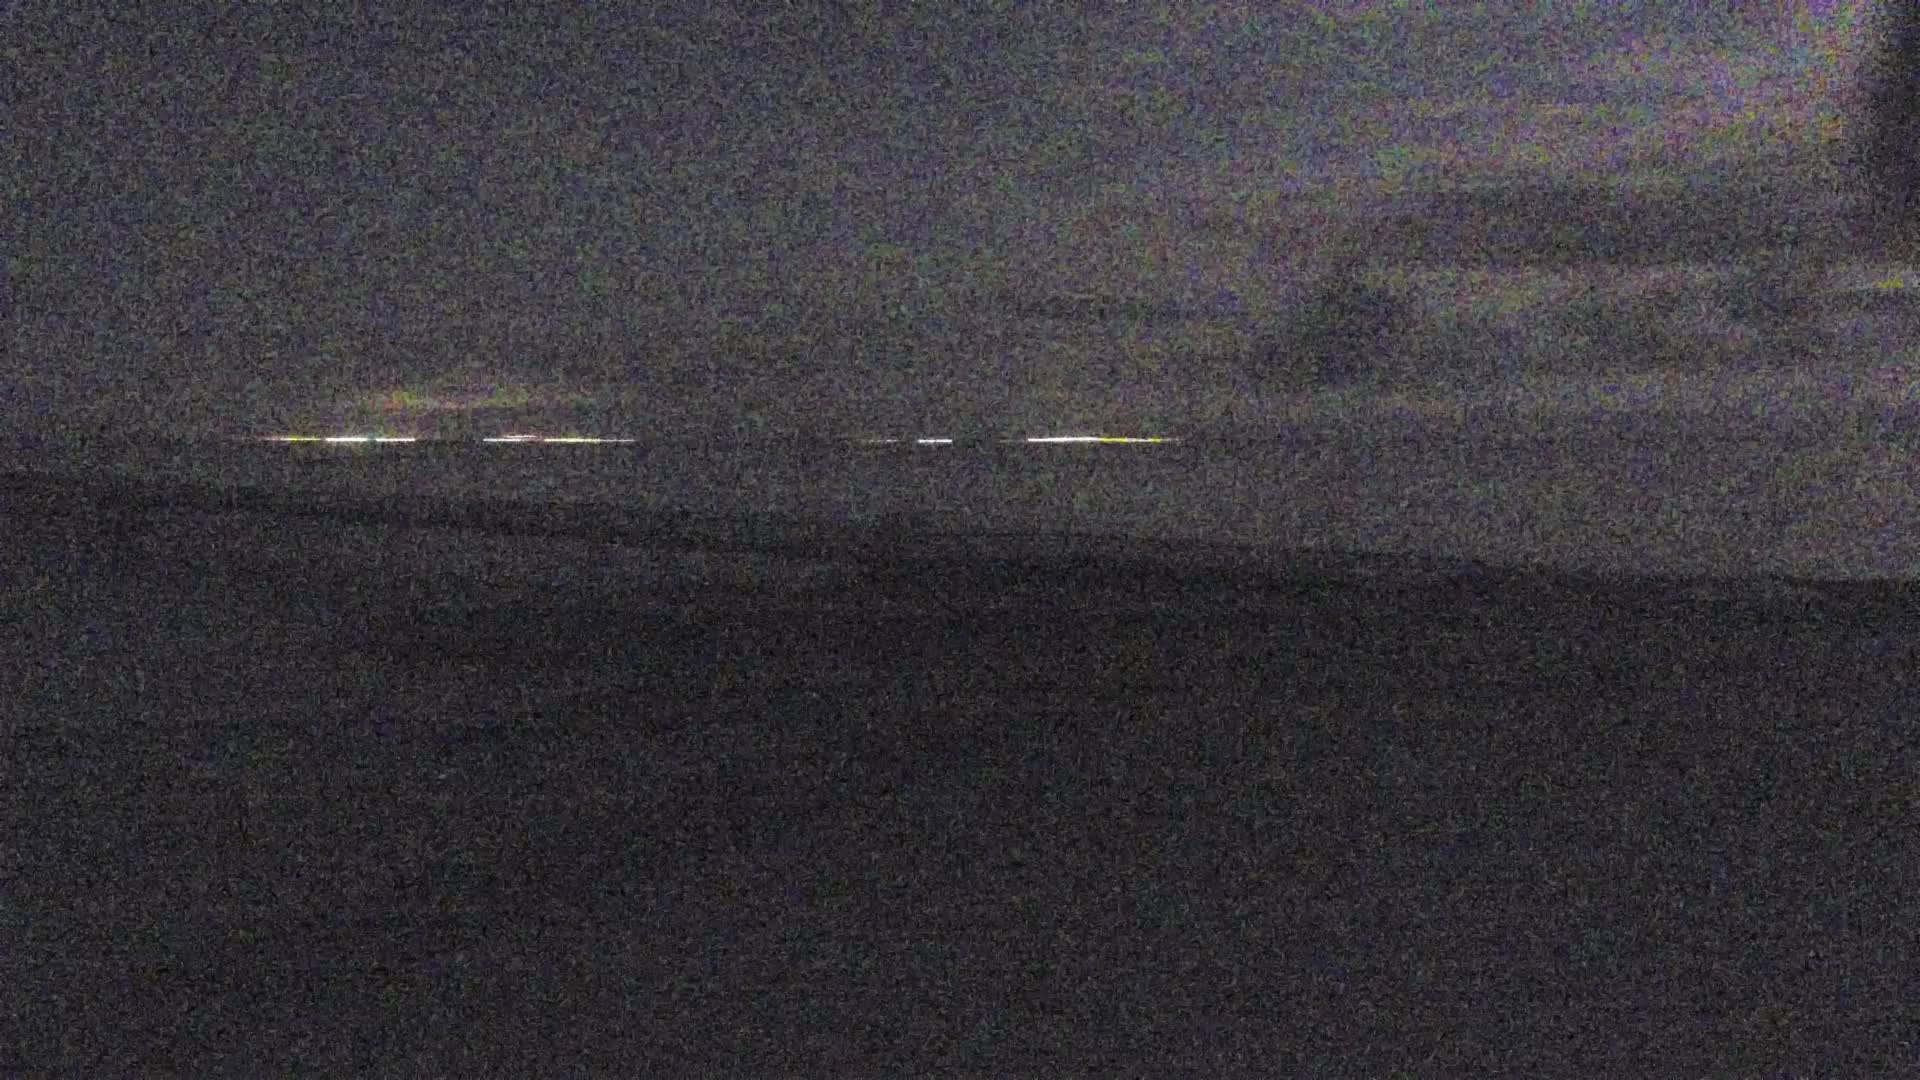 La Tranche-sur-Mer Mer. 04:33